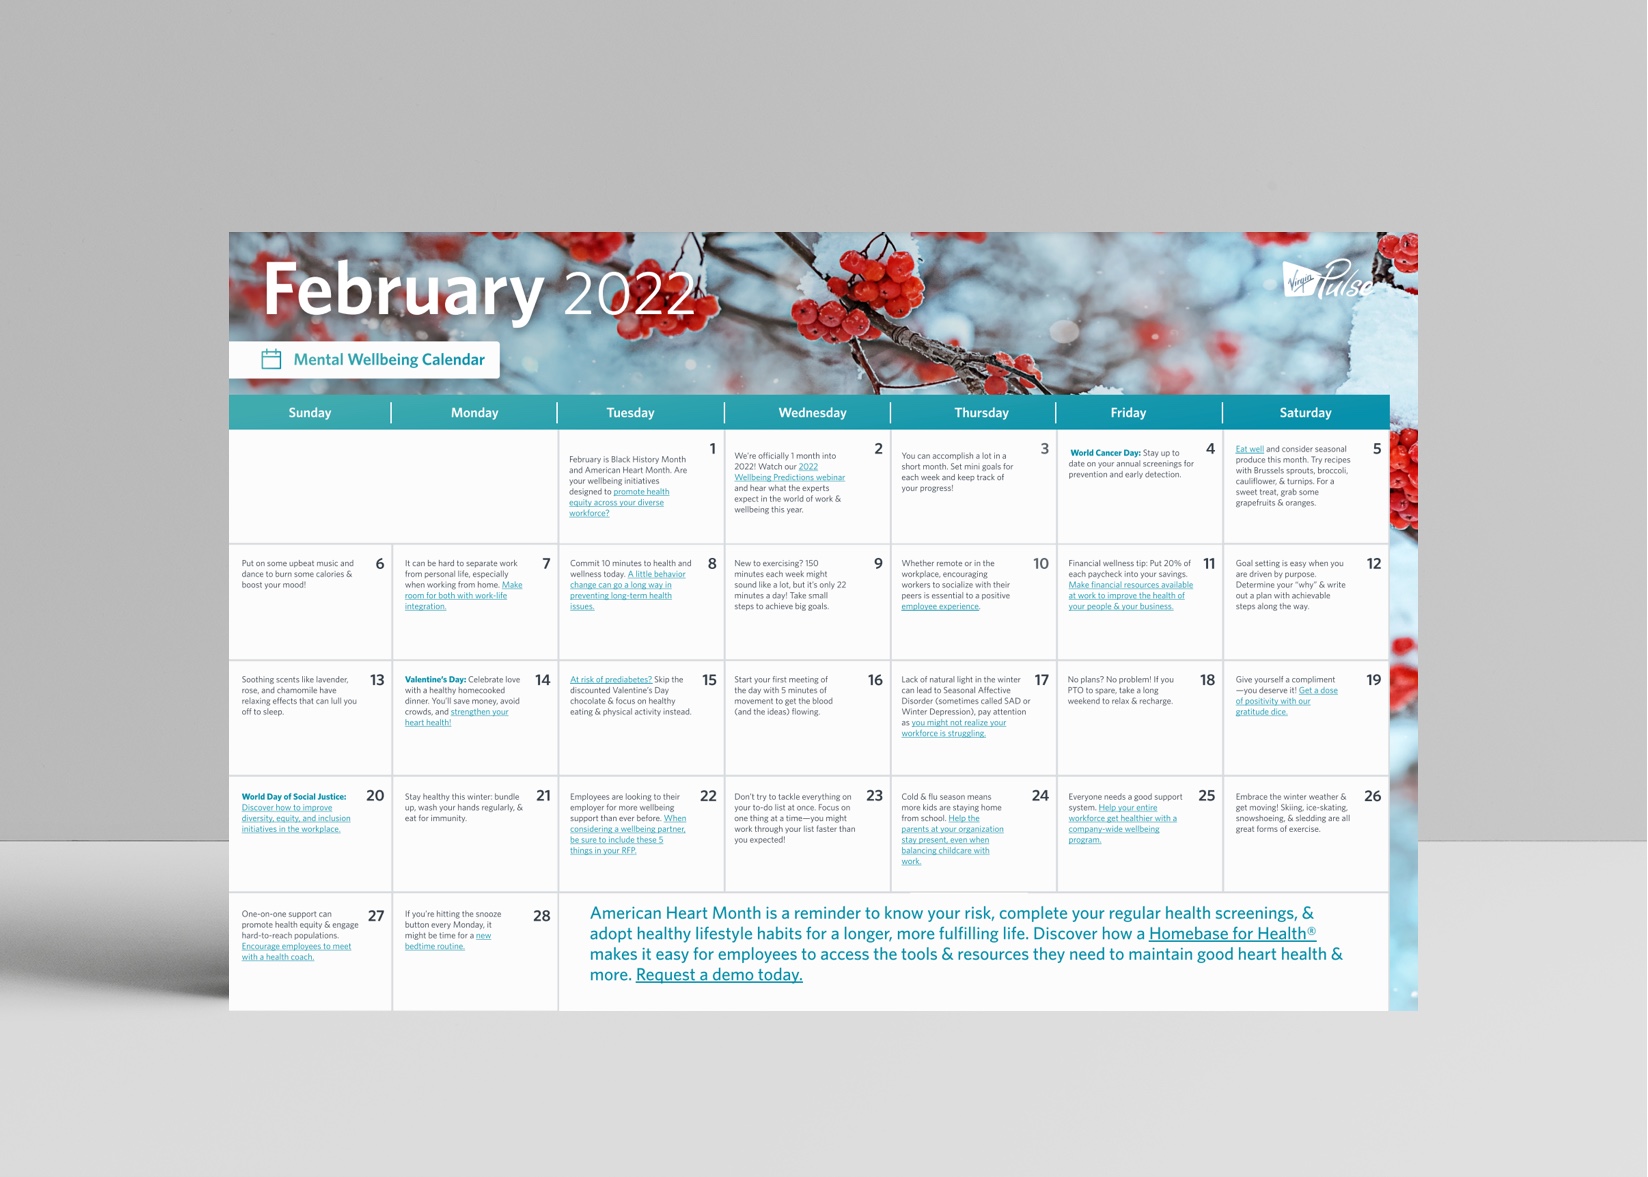 February 2022 Mental Wellbeing Calendar Virgin Pulse